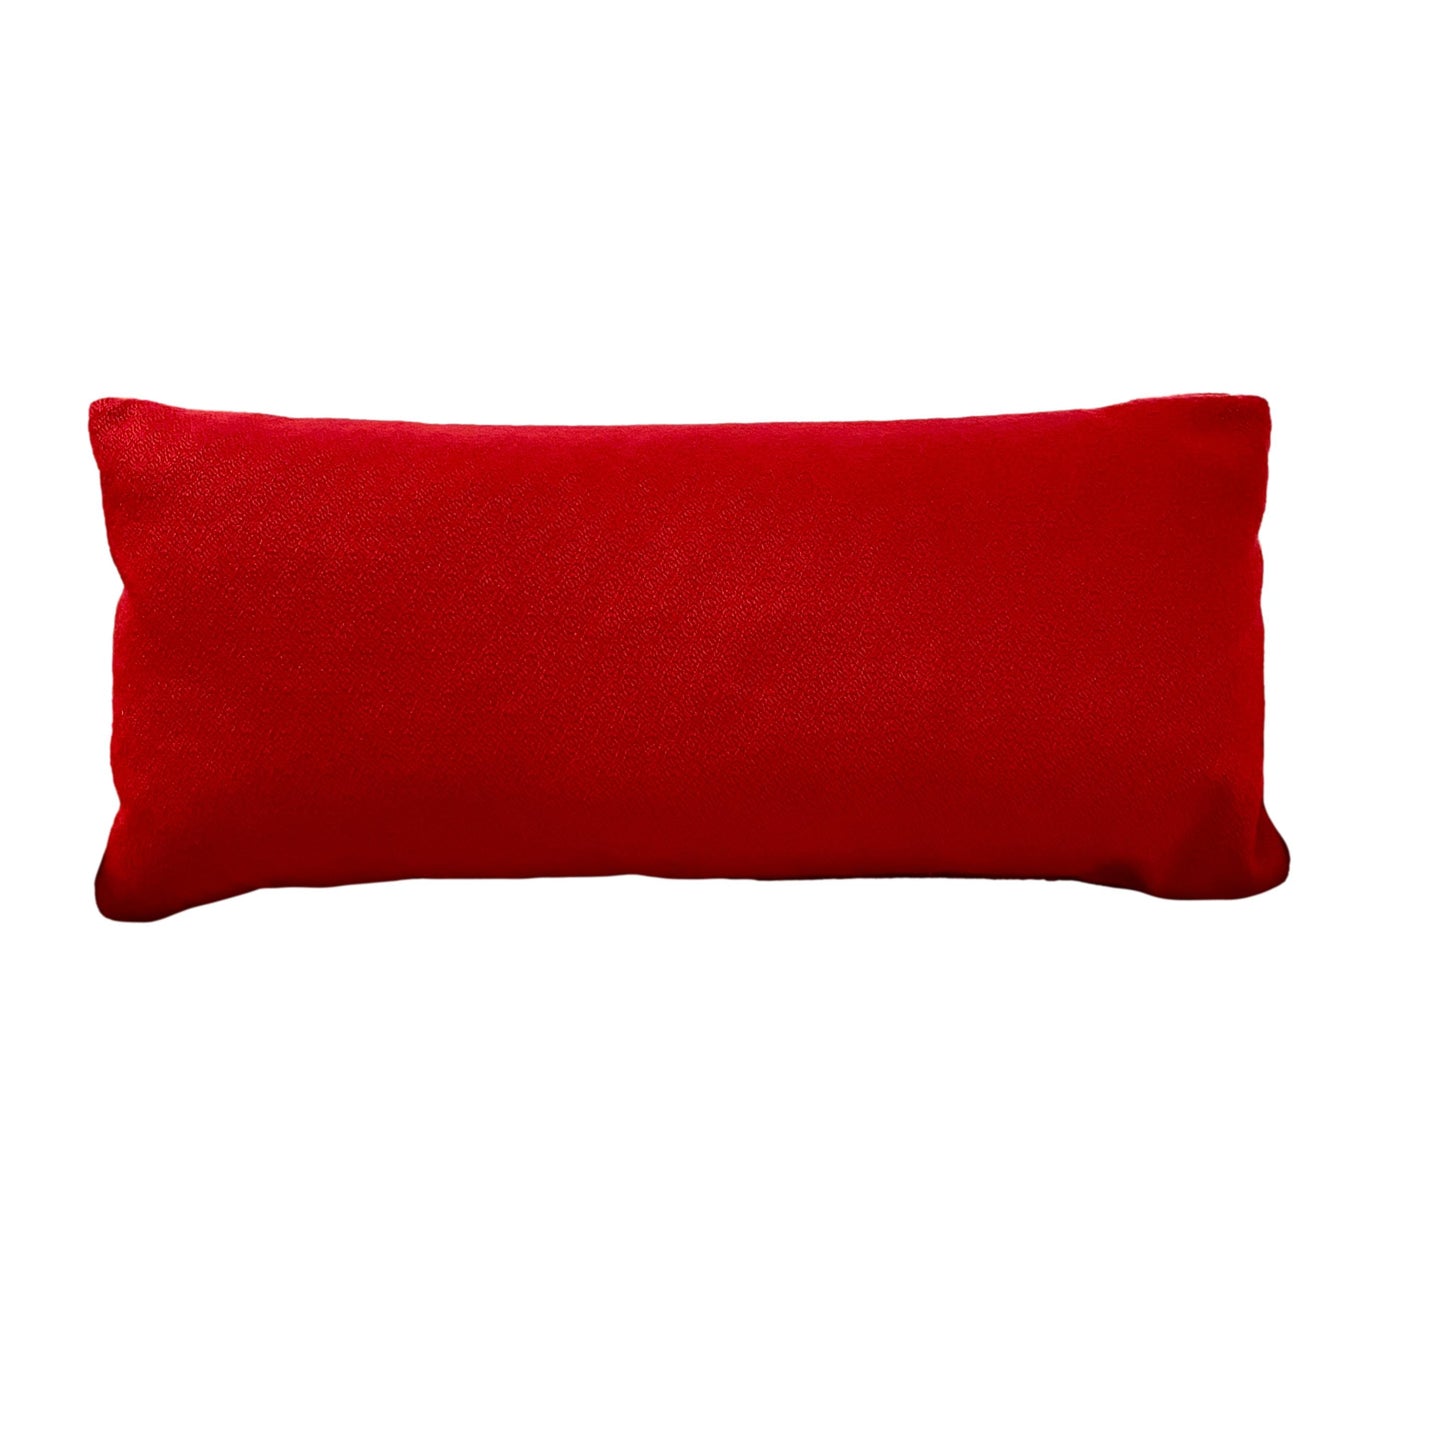 Roche Bobois Red Down Pillow